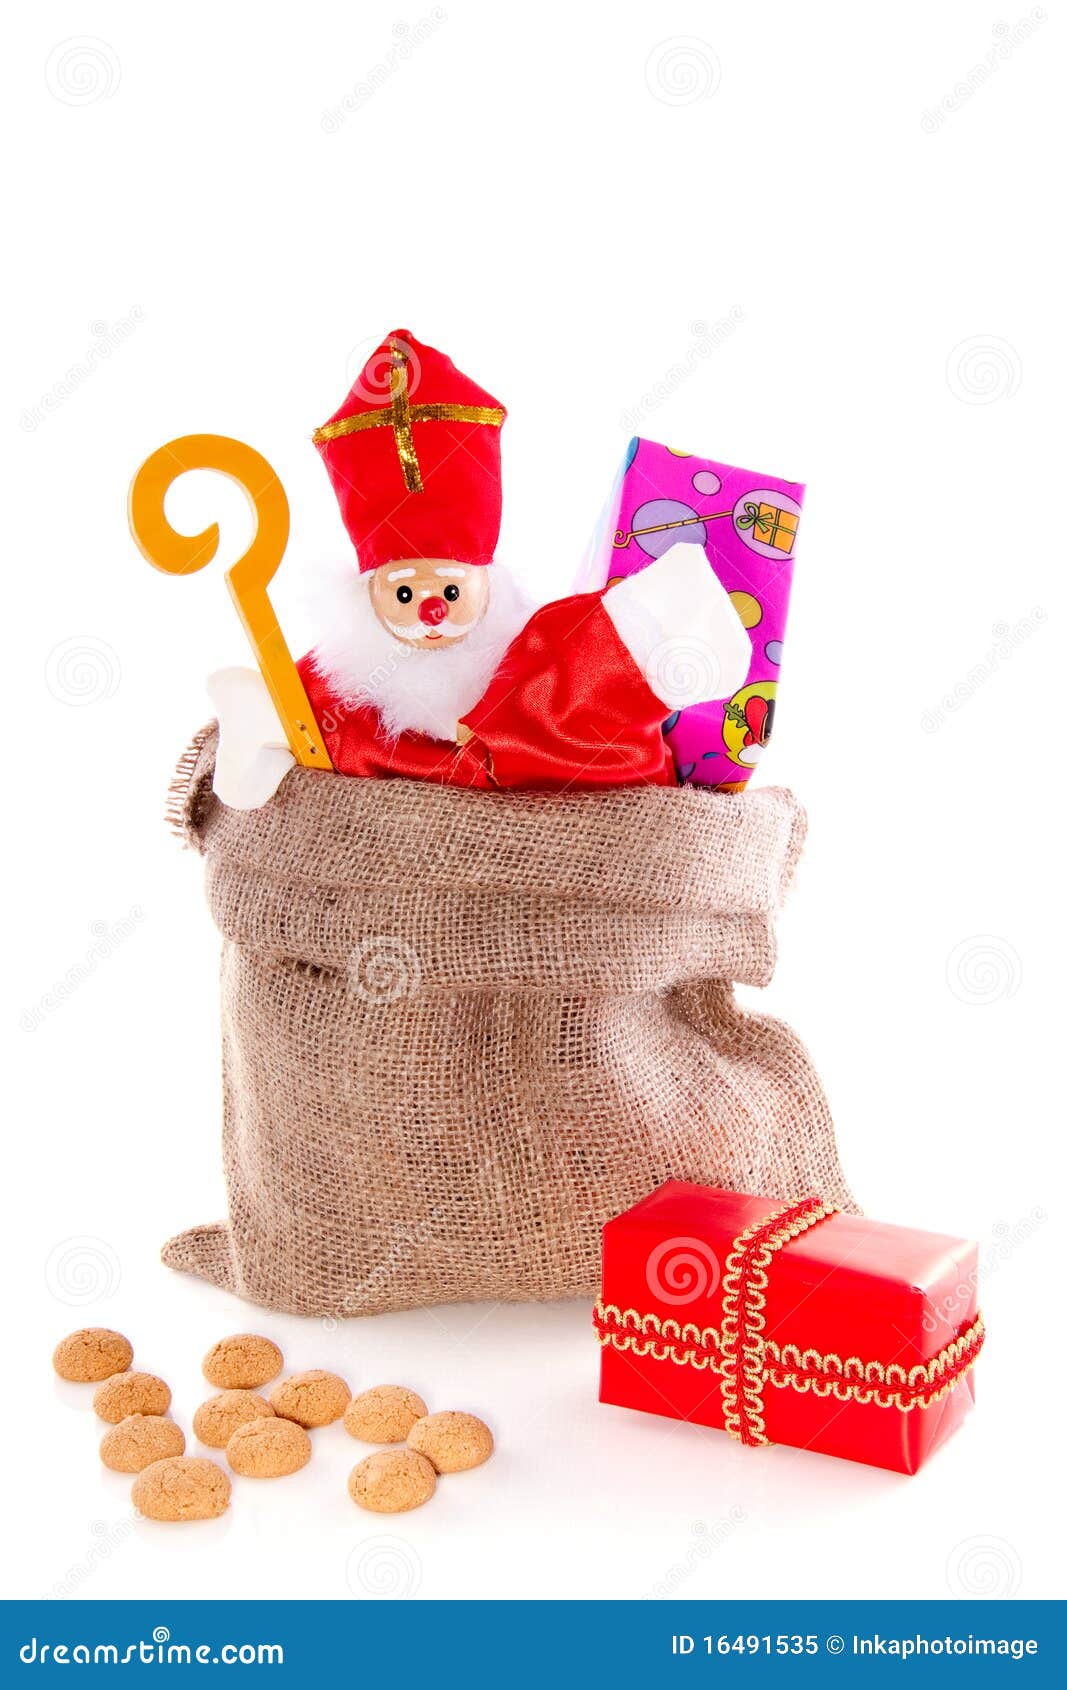 Klusjesman Geef energie Waden Dutch Sinterklaas with Gifts and Candy Stock Image - Image of cheerful,  pink: 16491535